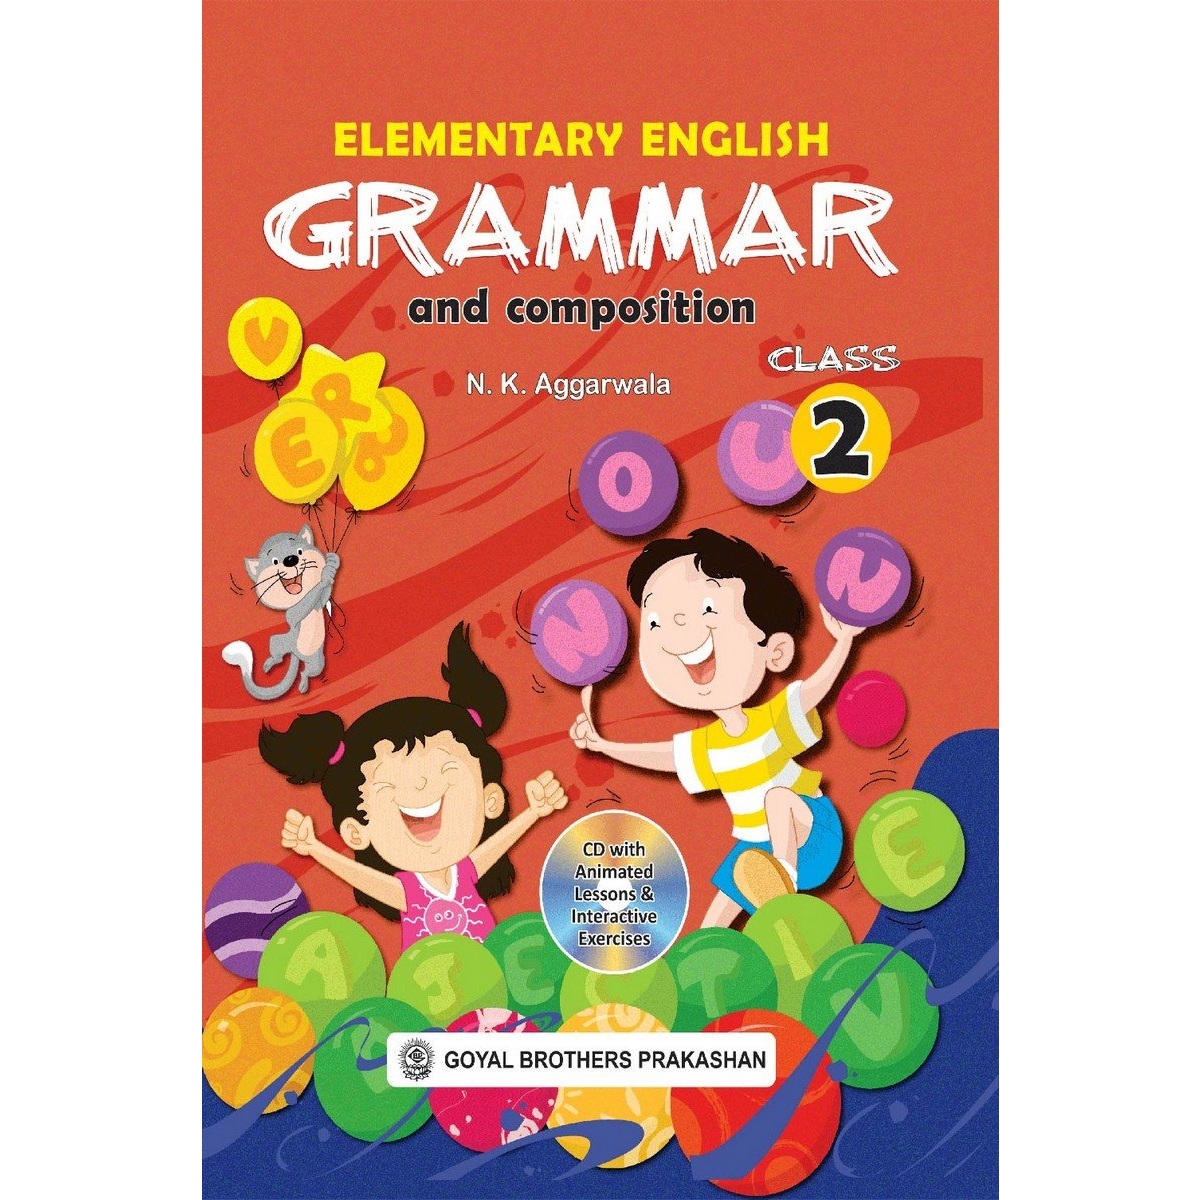 Elementary english. Elementary English Grammar and Composition. Popular Grammar and Composition. Grammar and Composition 3. Grammar book 2 класс.